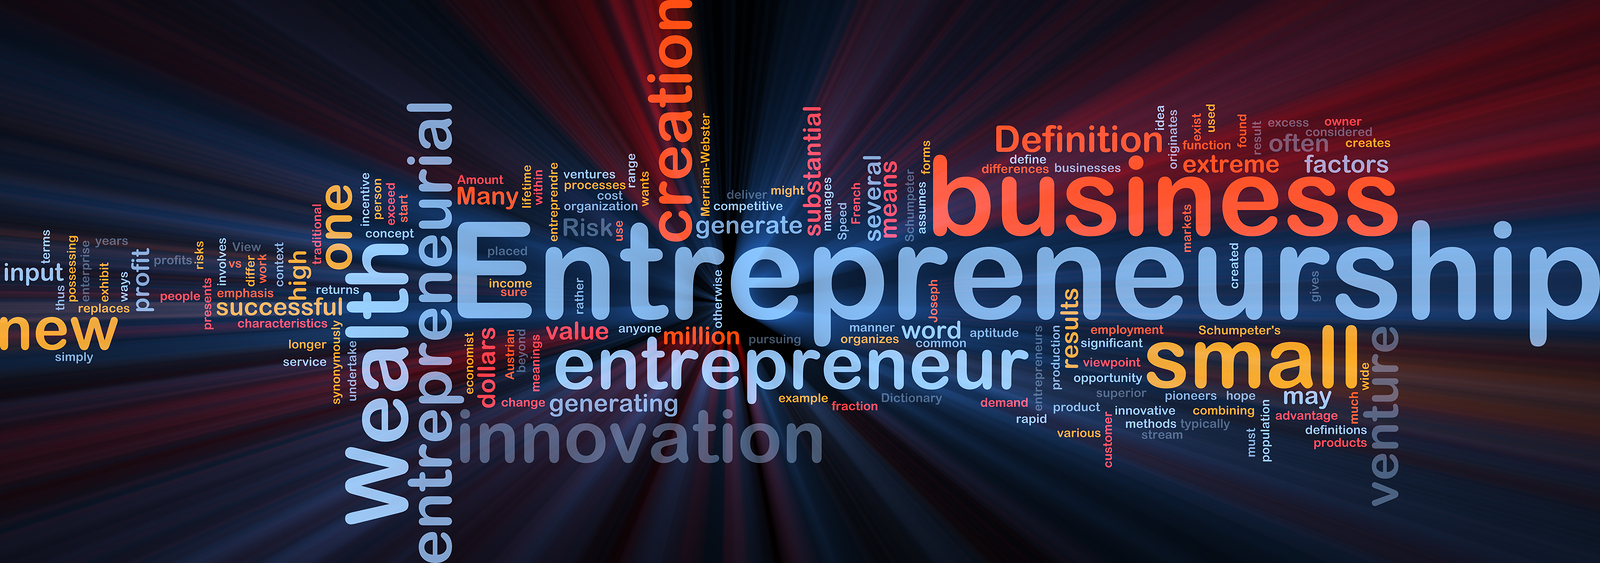 entrepreneurship-image